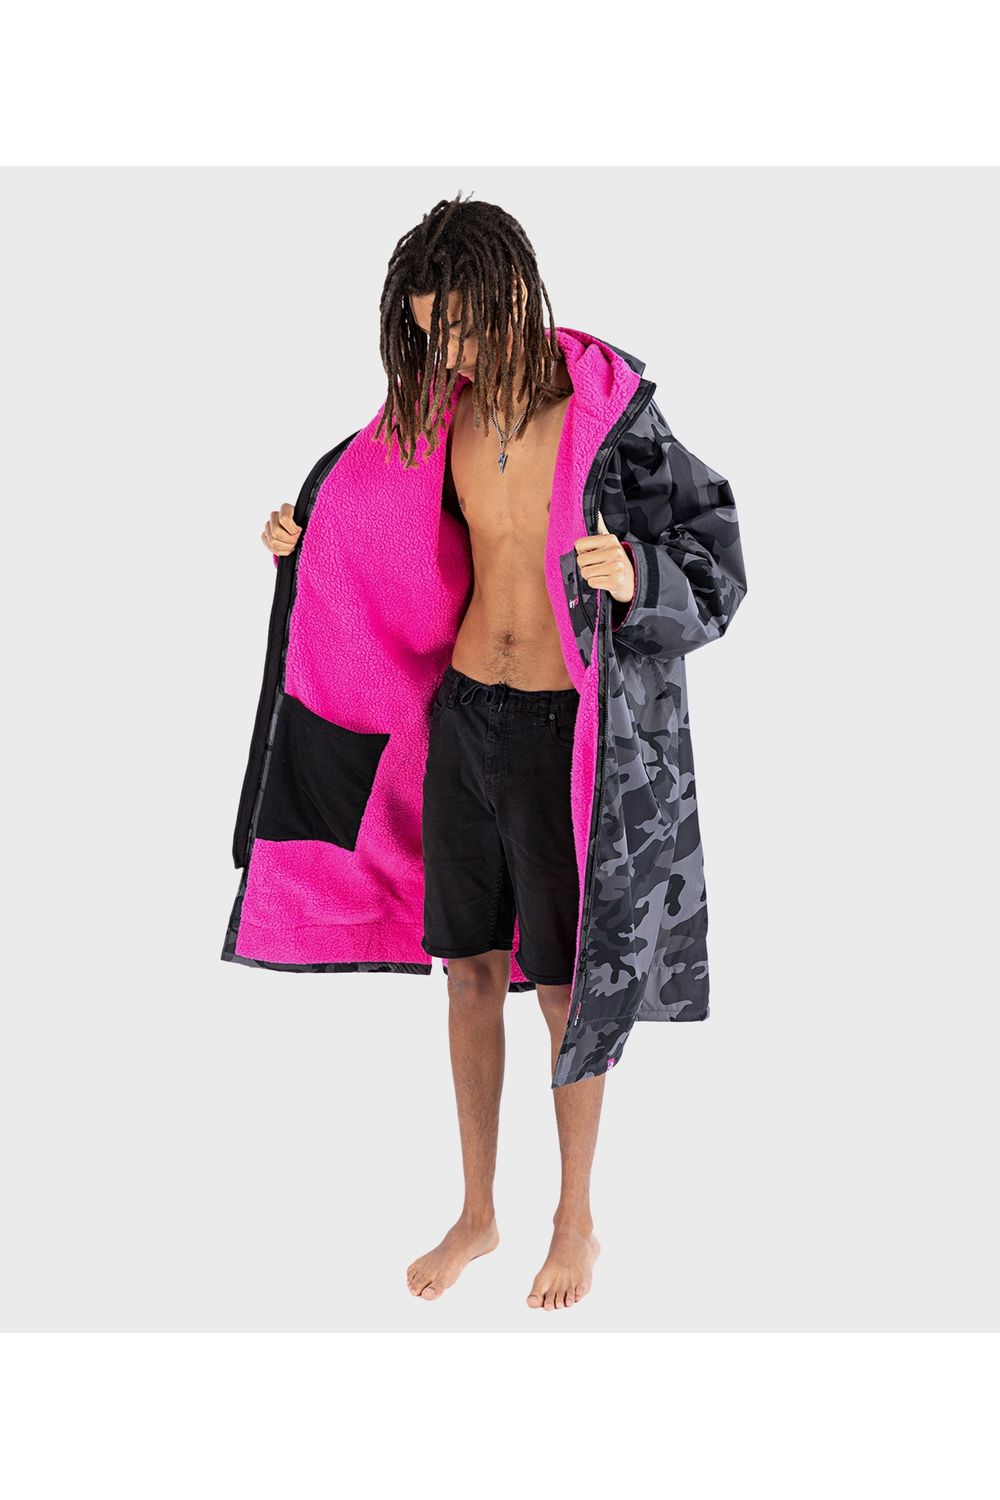 Dryrobe Advance Adult Long Sleeve Black Camo/Pink